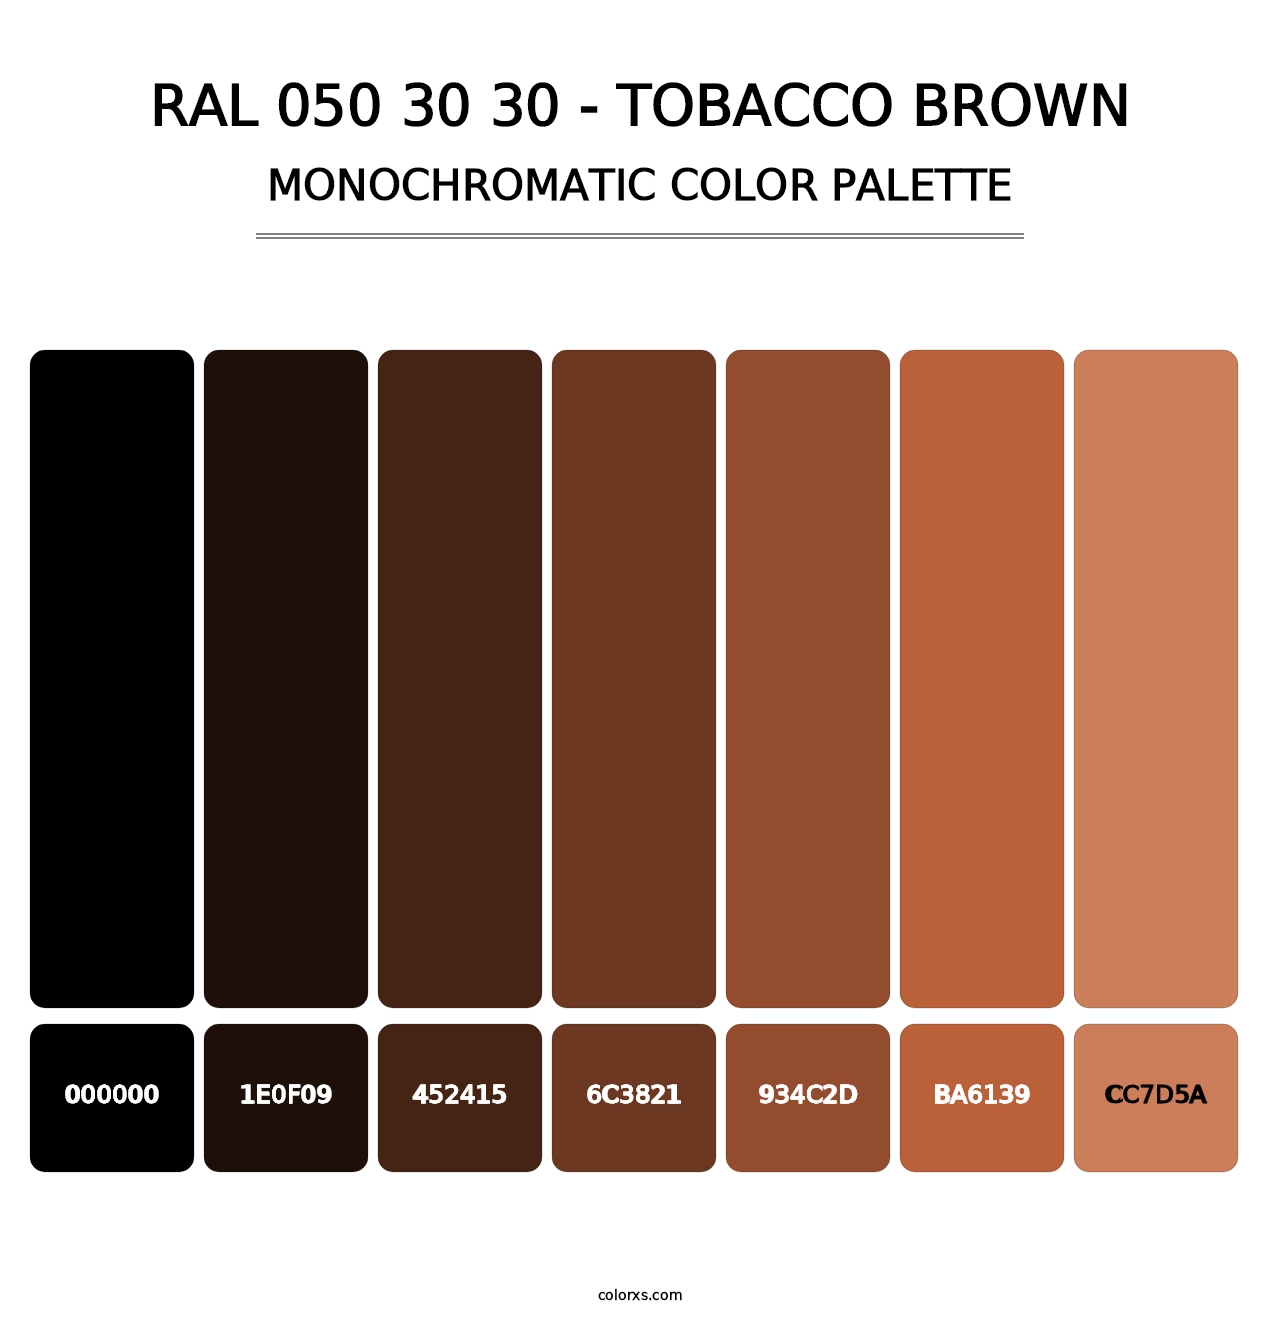 RAL 050 30 30 - Tobacco Brown - Monochromatic Color Palette